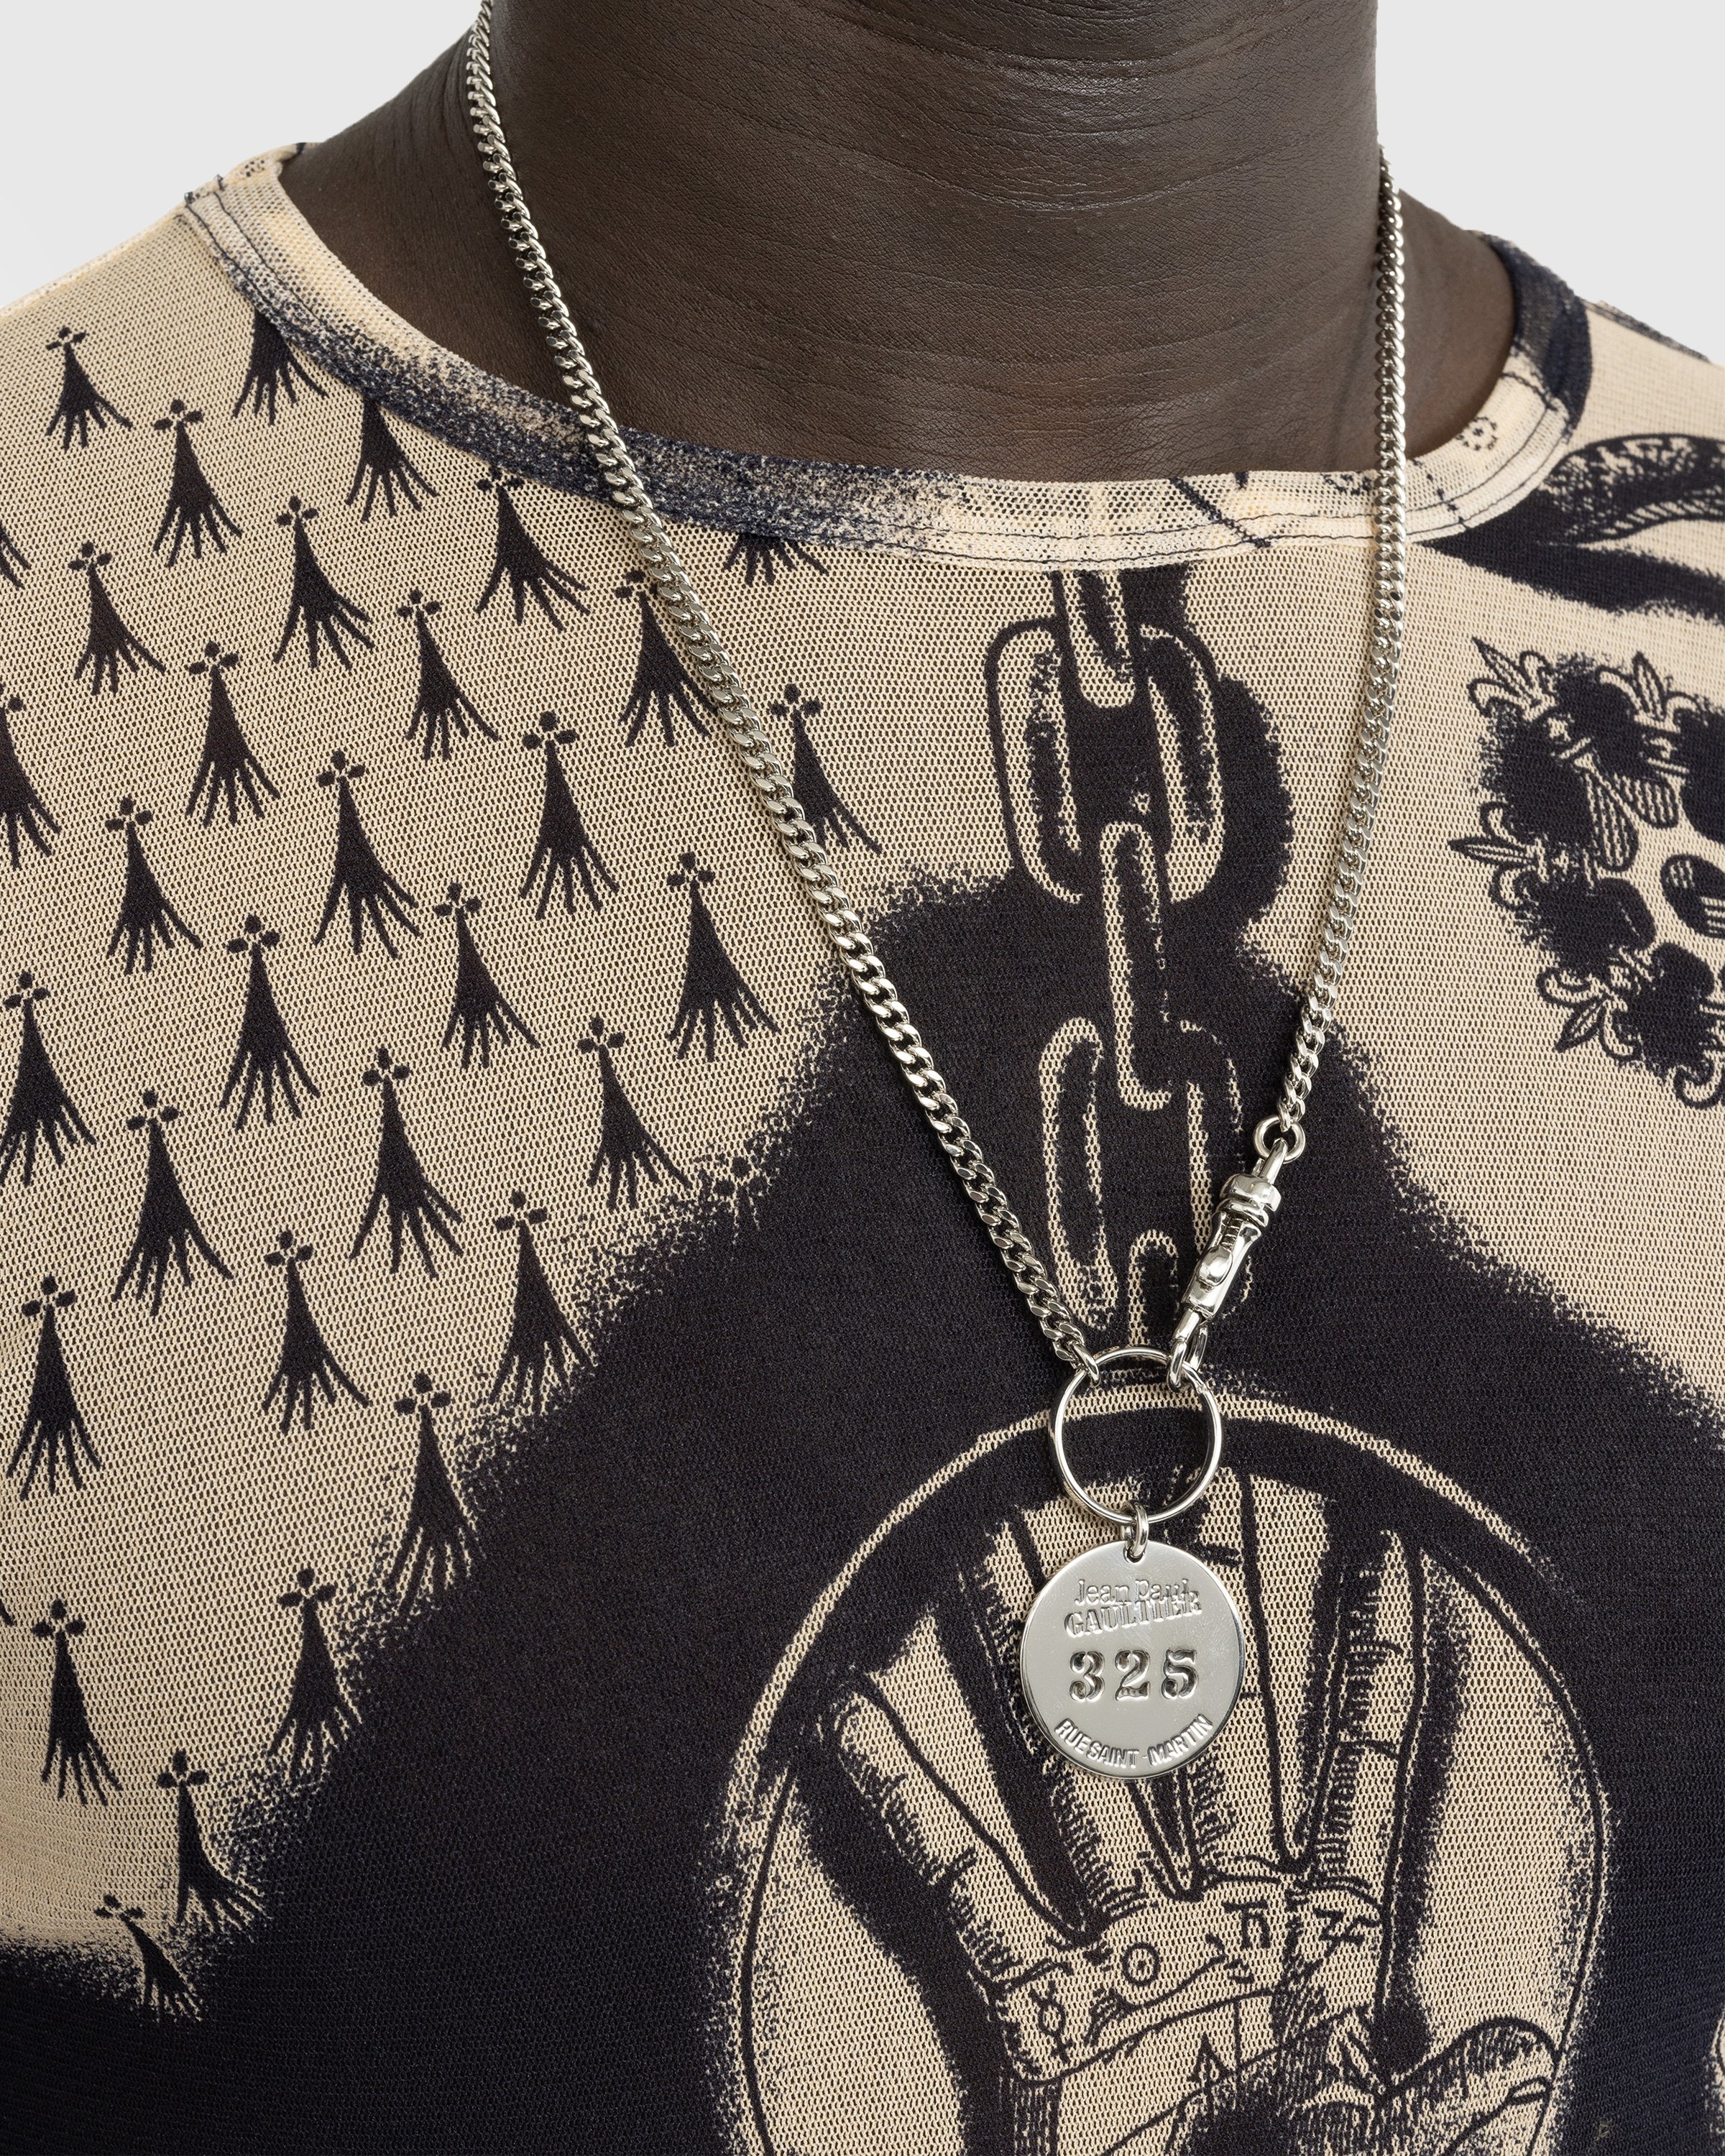 Jean Paul Gaultier - 325 Necklace Silver - Accessories - Silver - Image 3